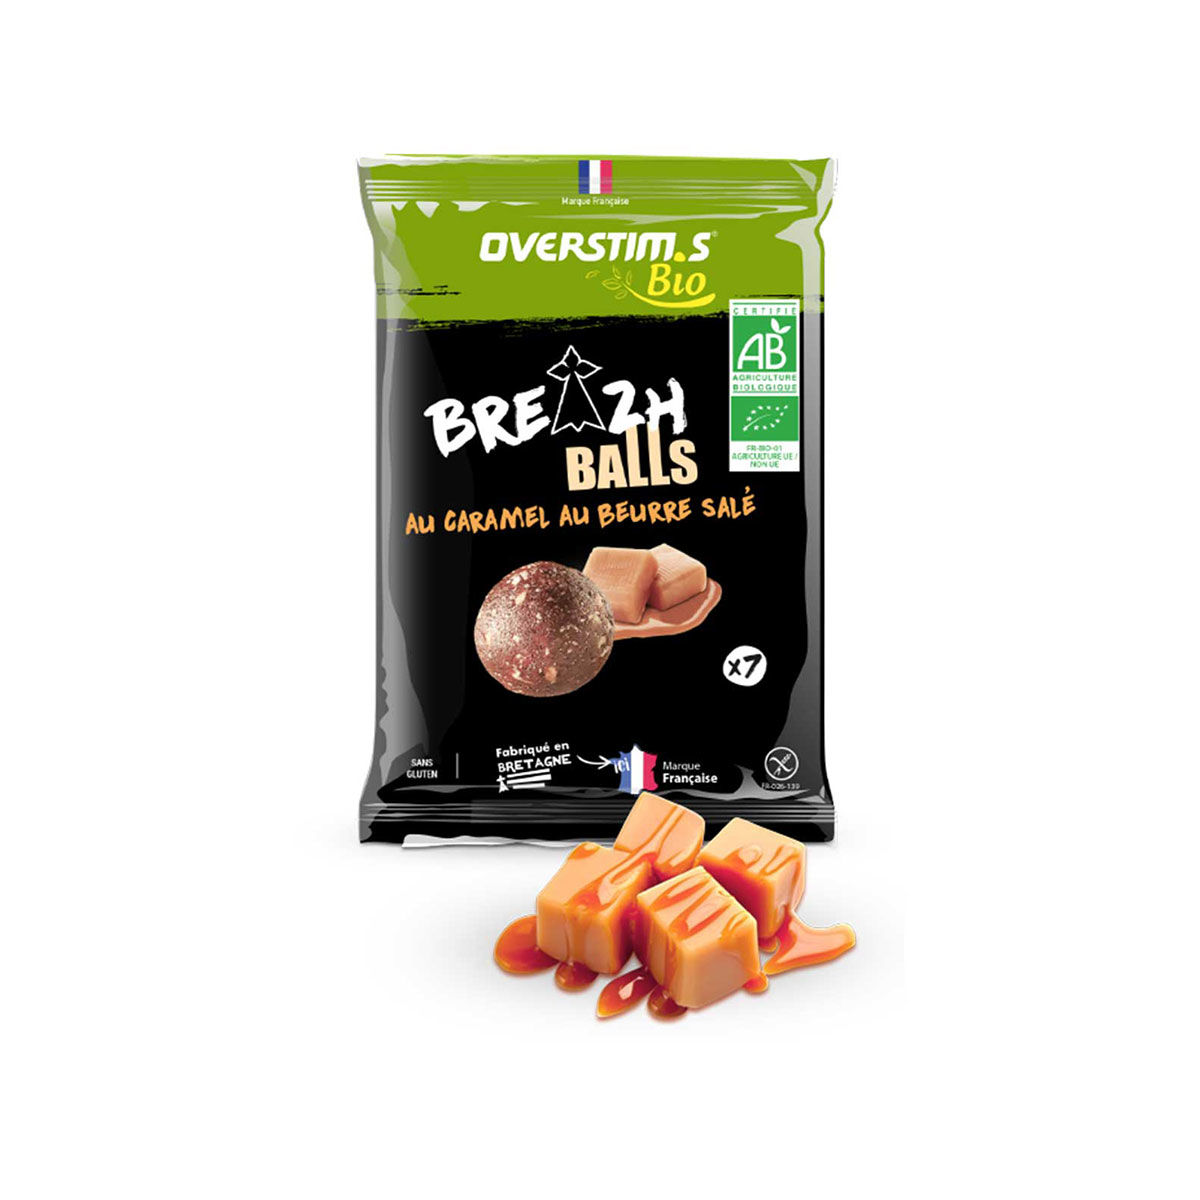 Energy balls bio Overstim.s - Caramel au beurre salé